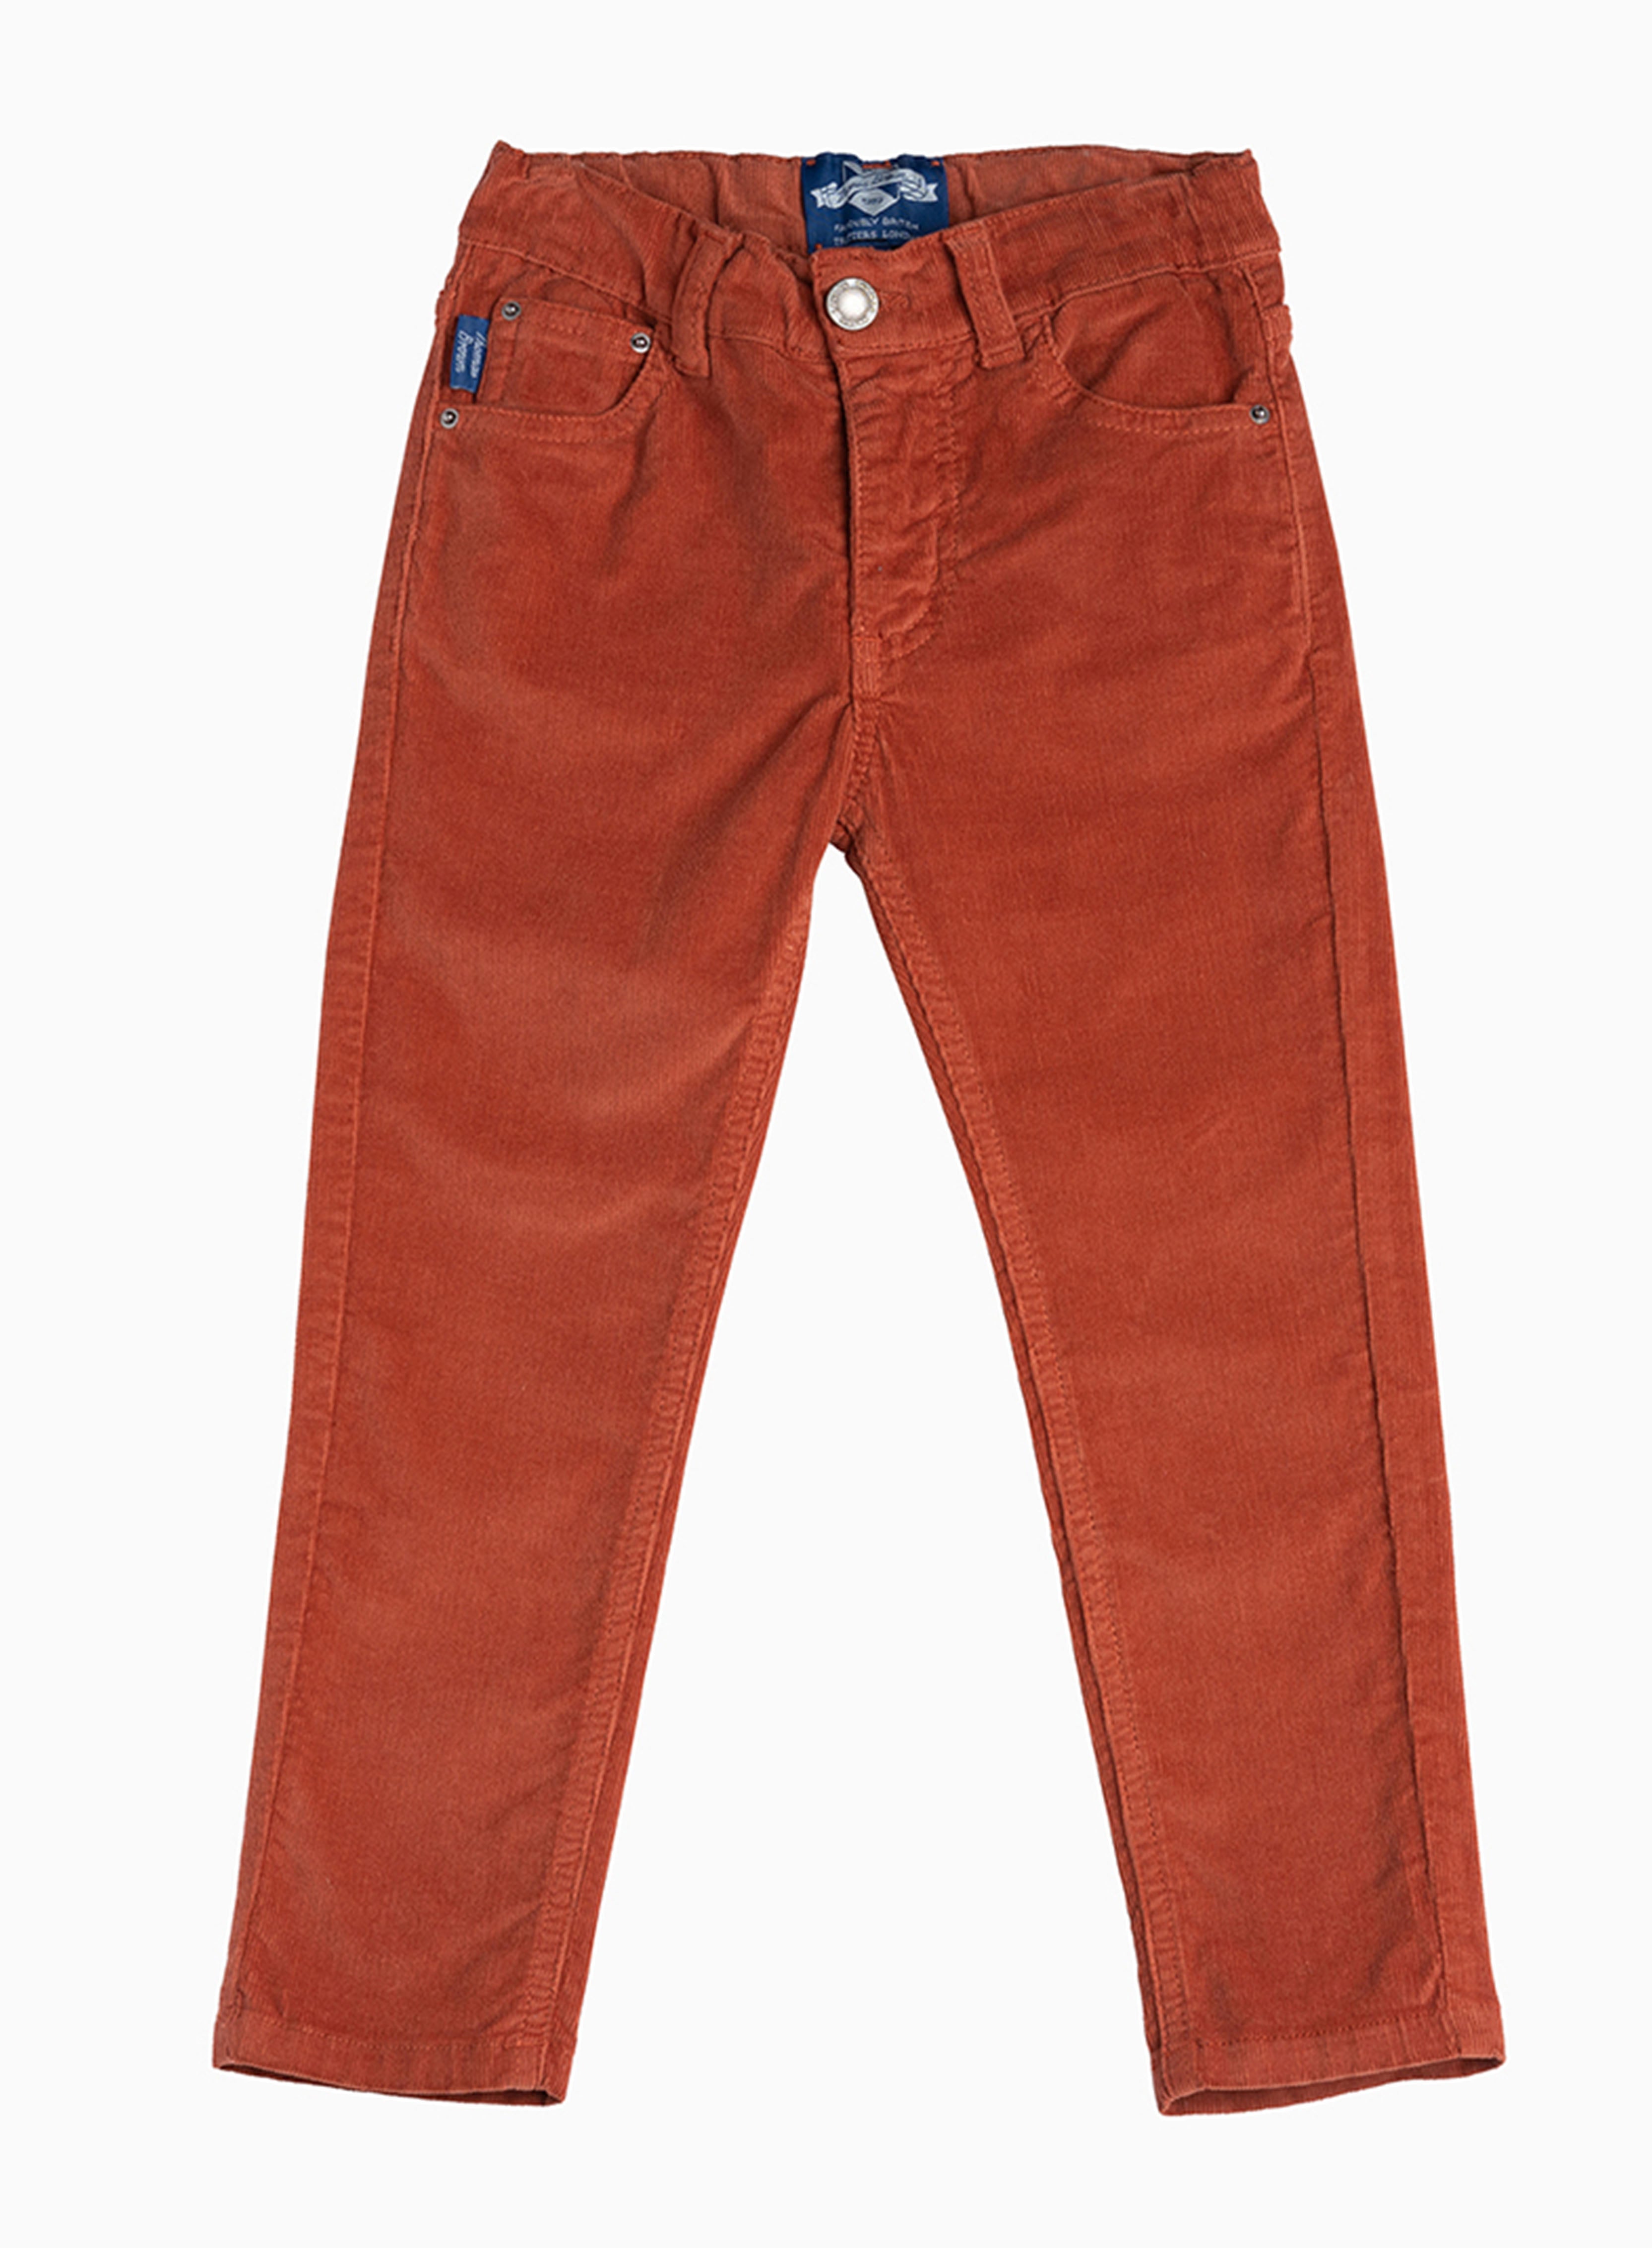 Jake Jeans in Rust